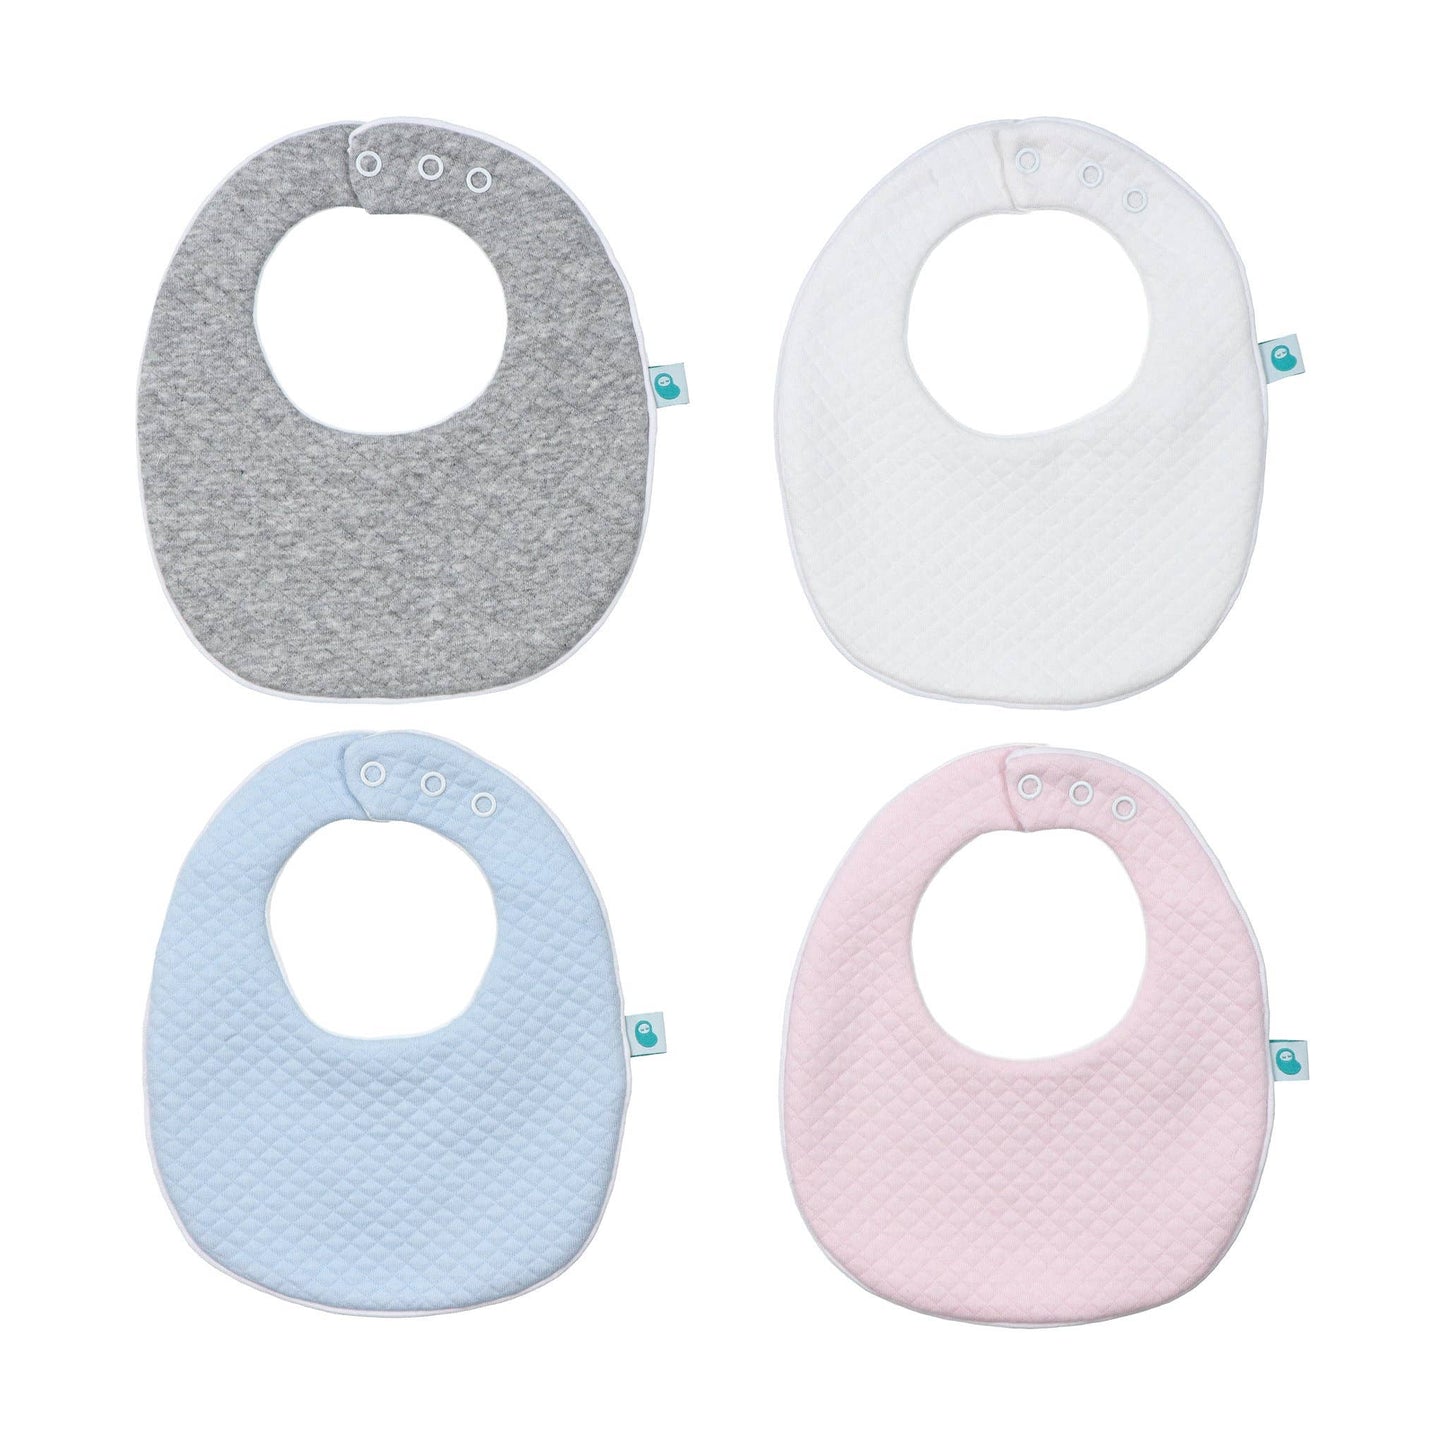 Diamond Knit Baby Bib with 3 Adjustable Positions